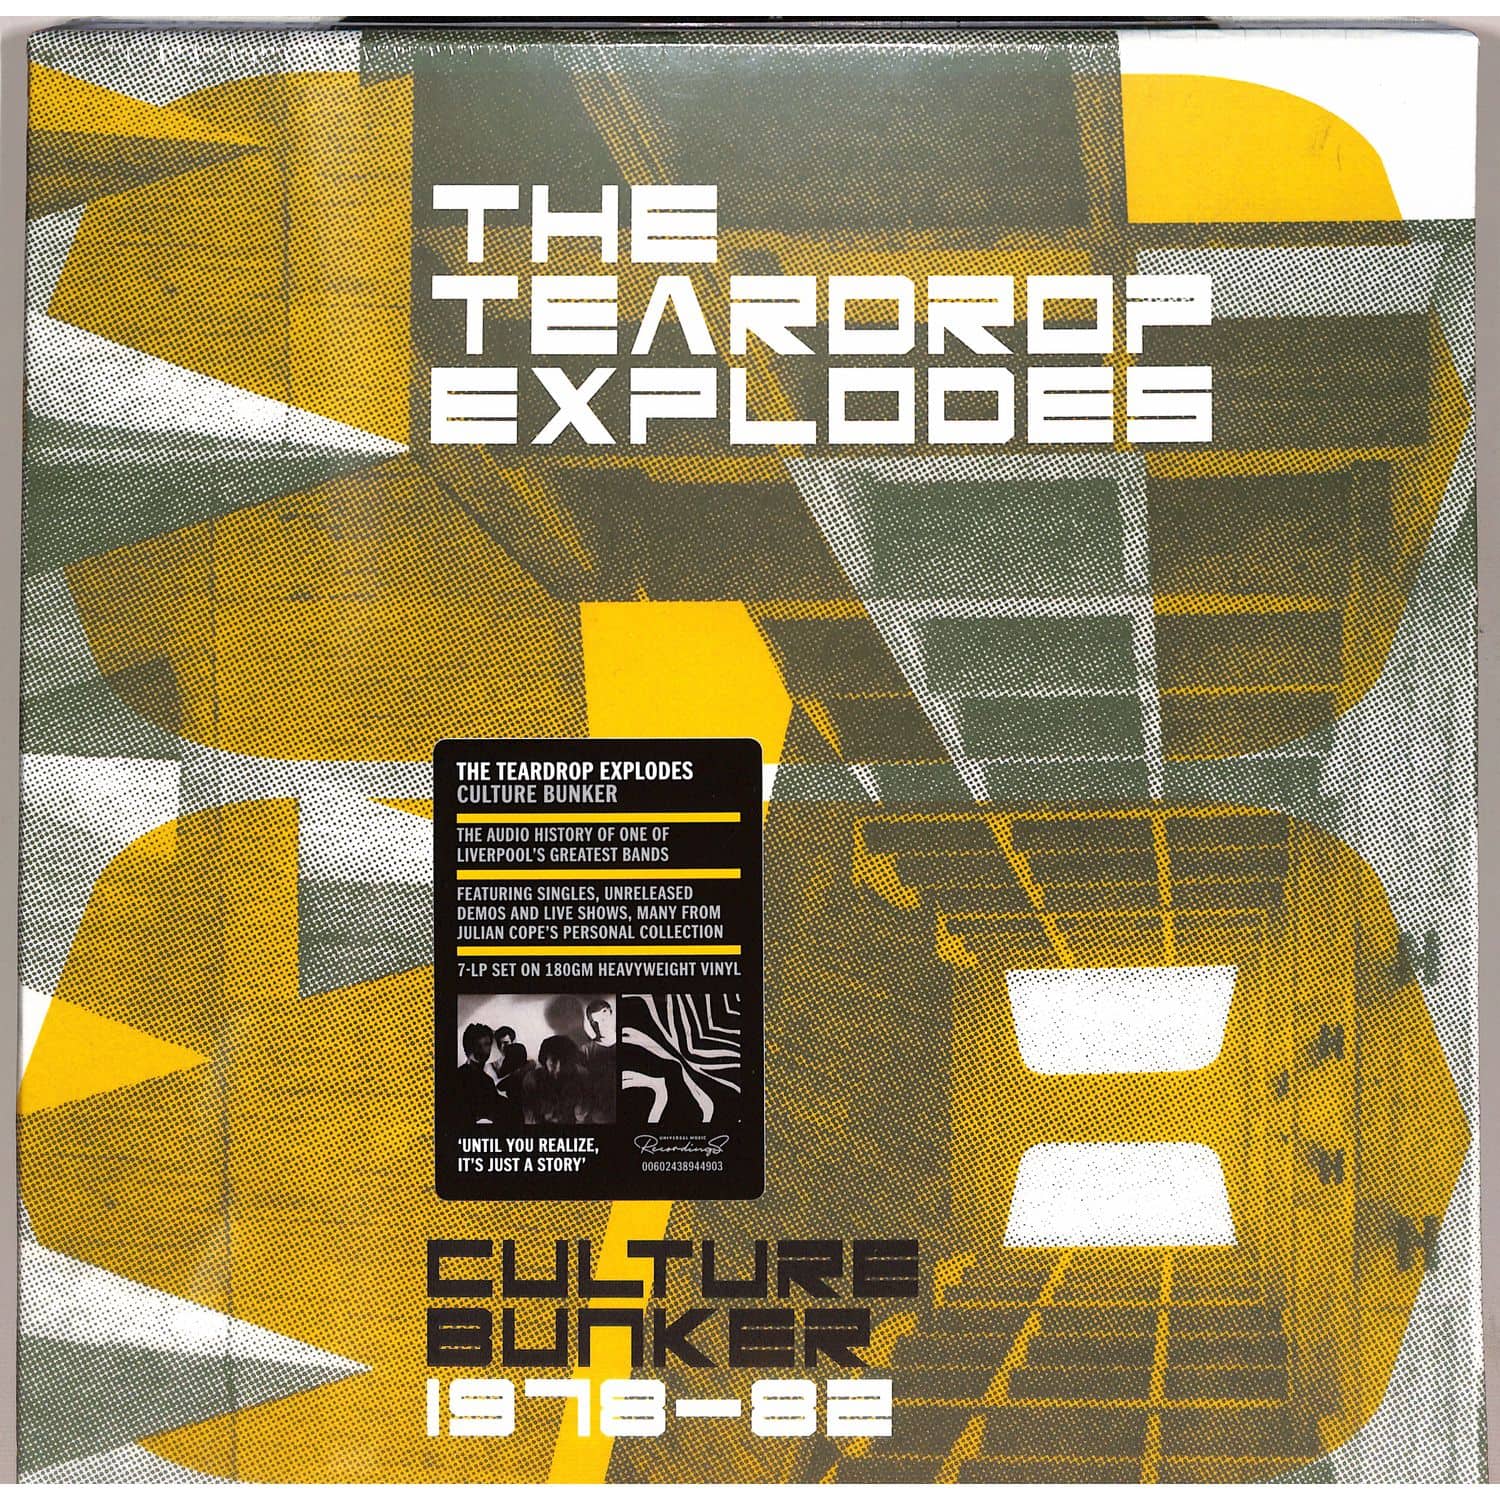 The Teardrop Explodes - CULTURE BUNKER 1978-82 